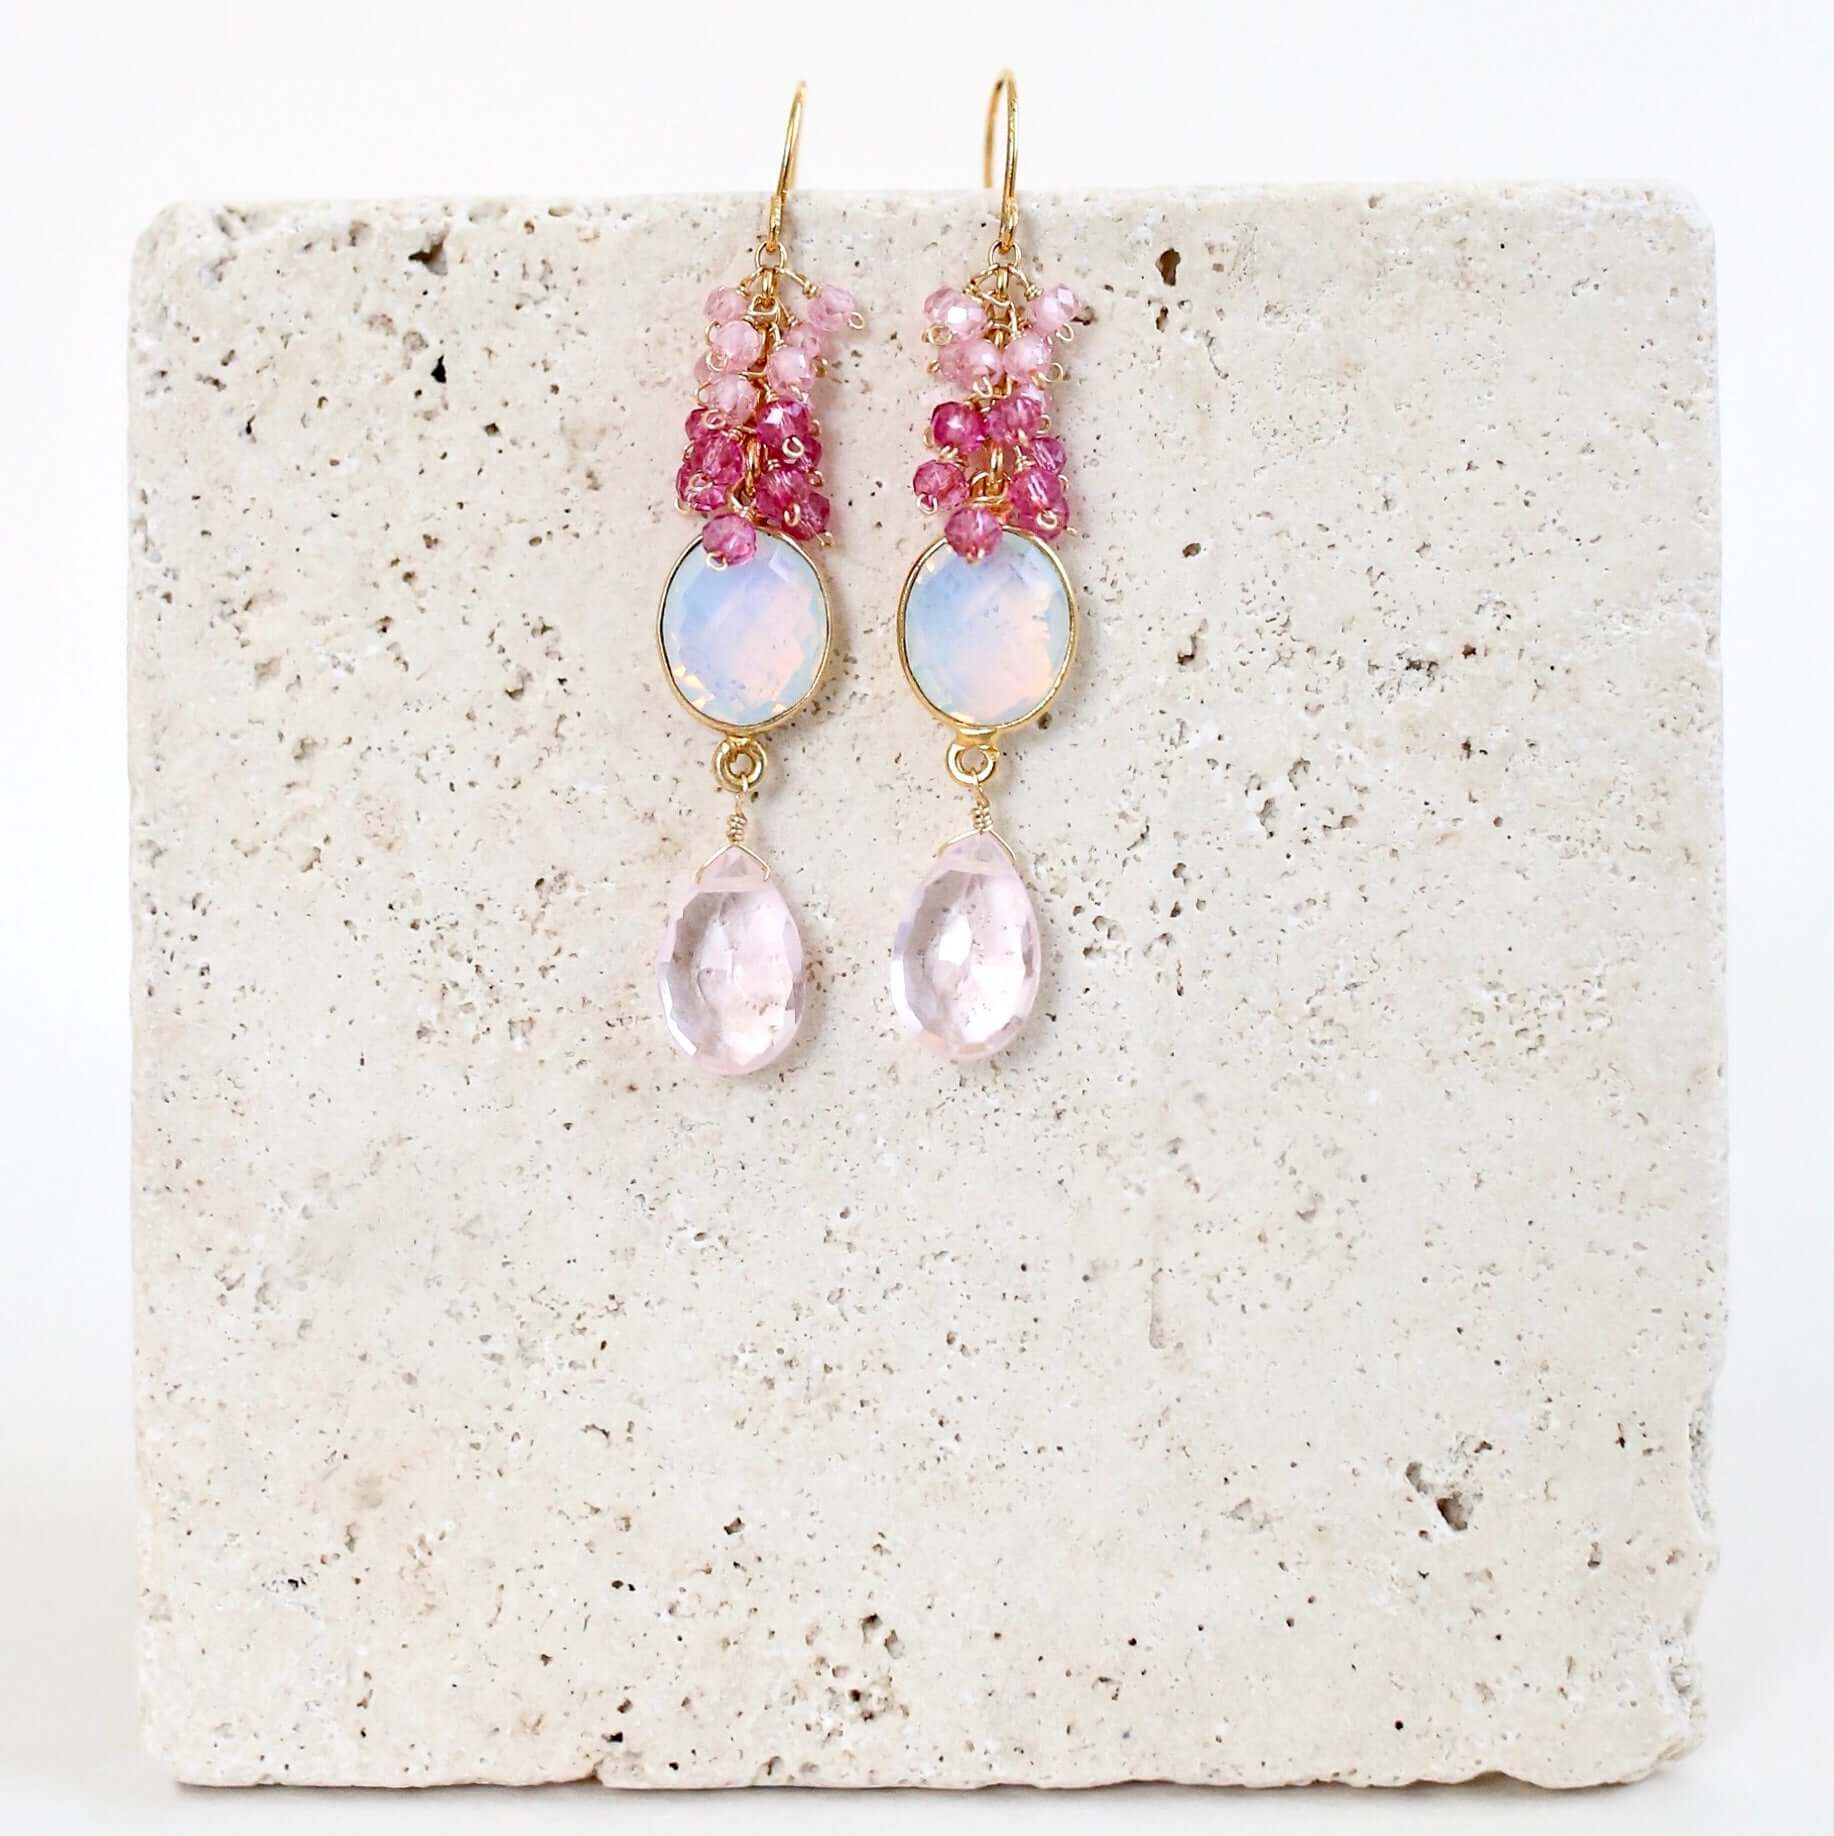  Long drop earrings with opal quartz bezel, pink clear quartz, and pink tourmaline gemstones